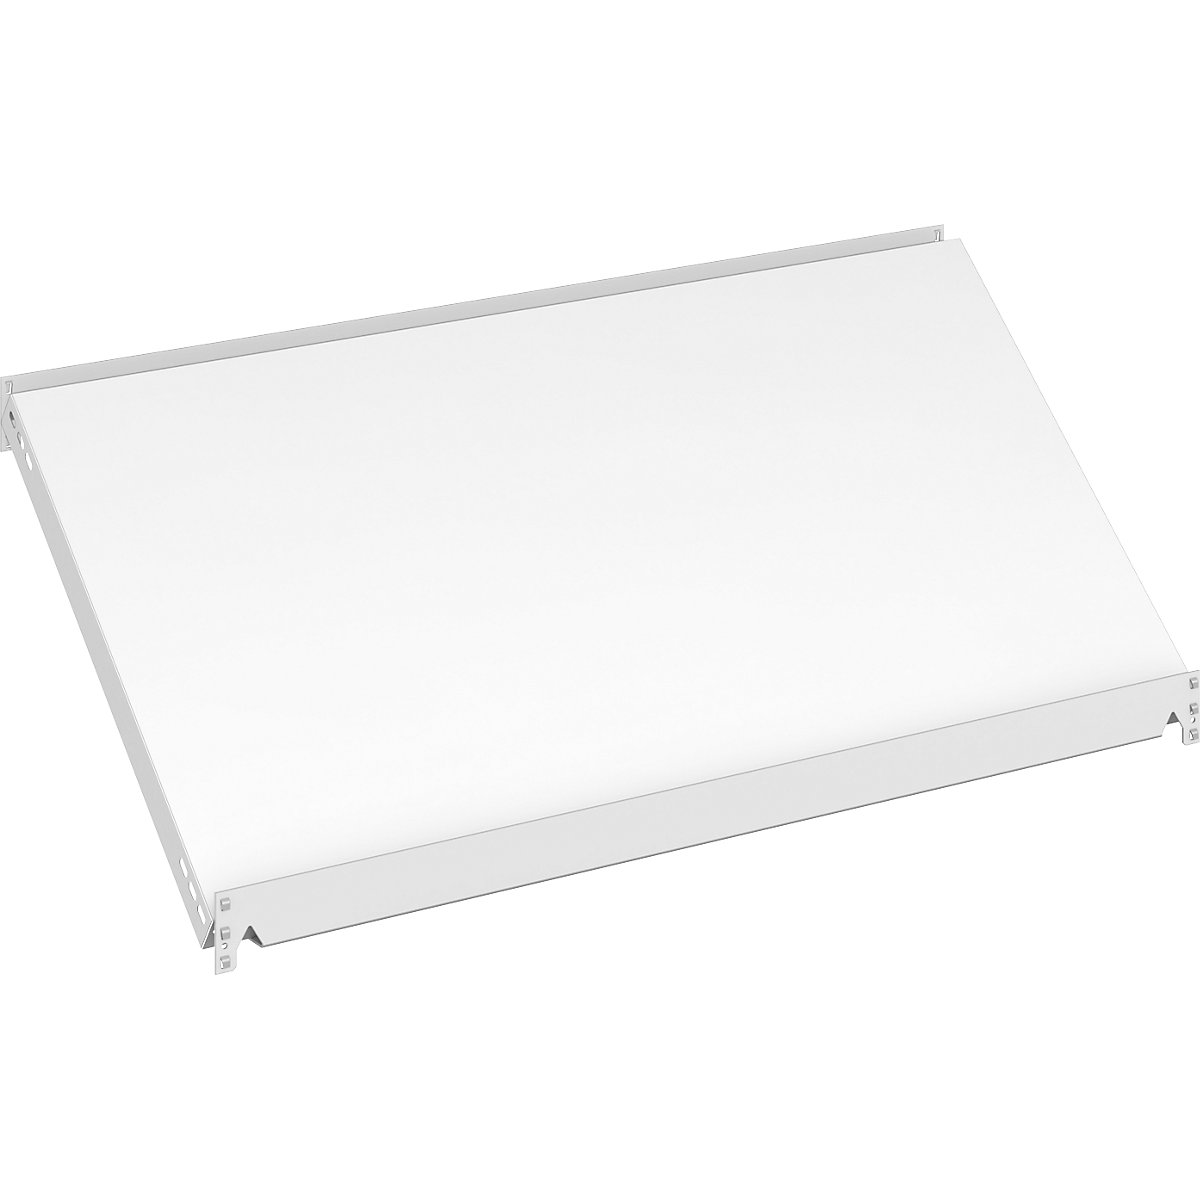 Slanted shelf – hofe, WxD 1000 x 600 mm, light grey RAL 7035